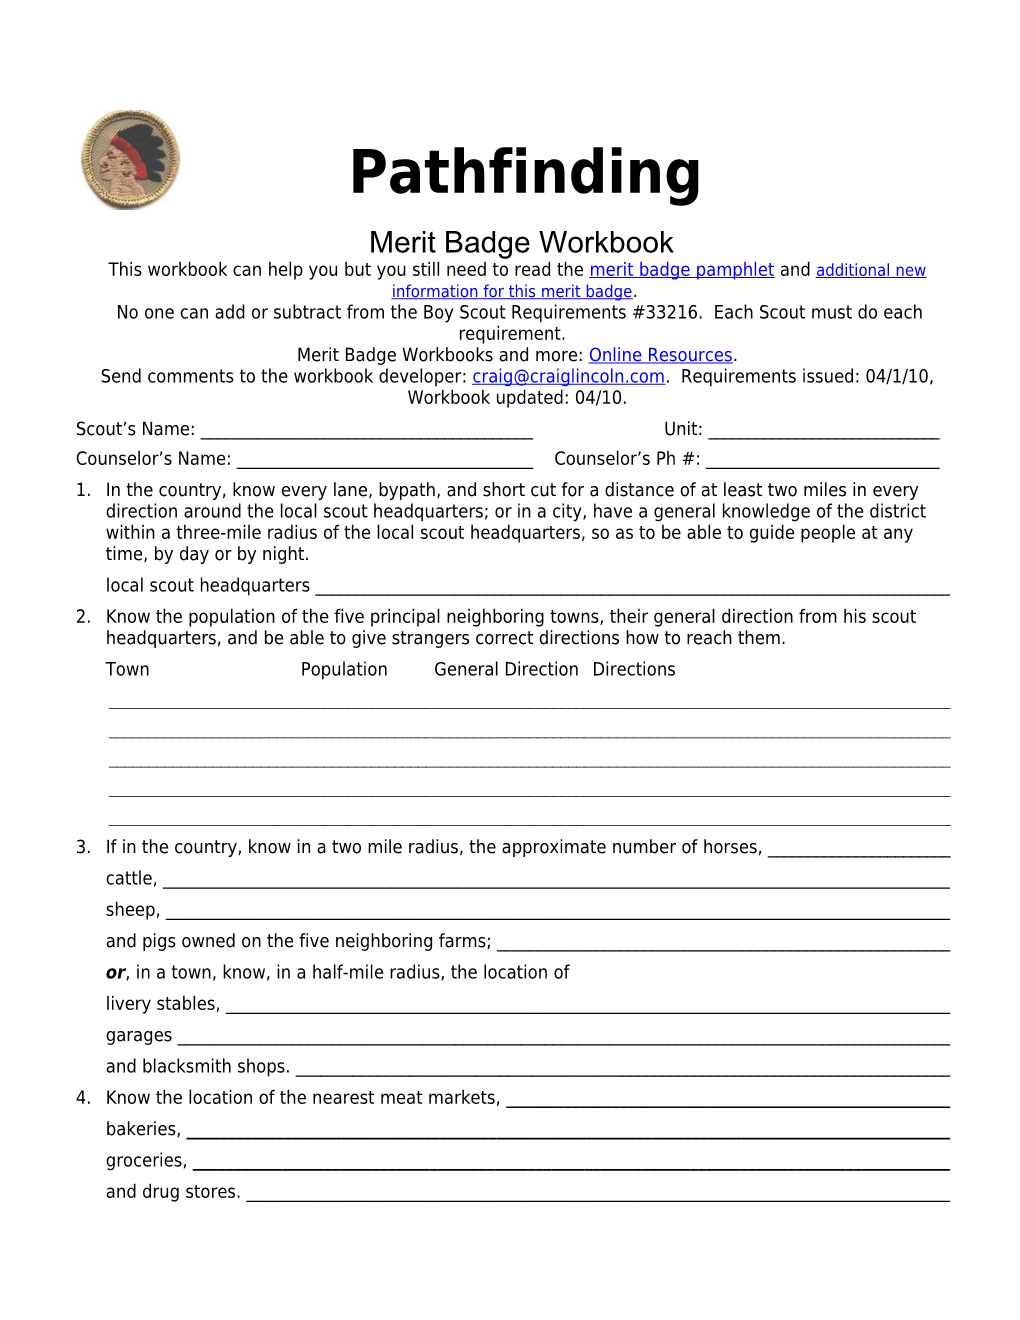 Pathfinding P. 1 Merit Badge Workbookscout's Name: ______